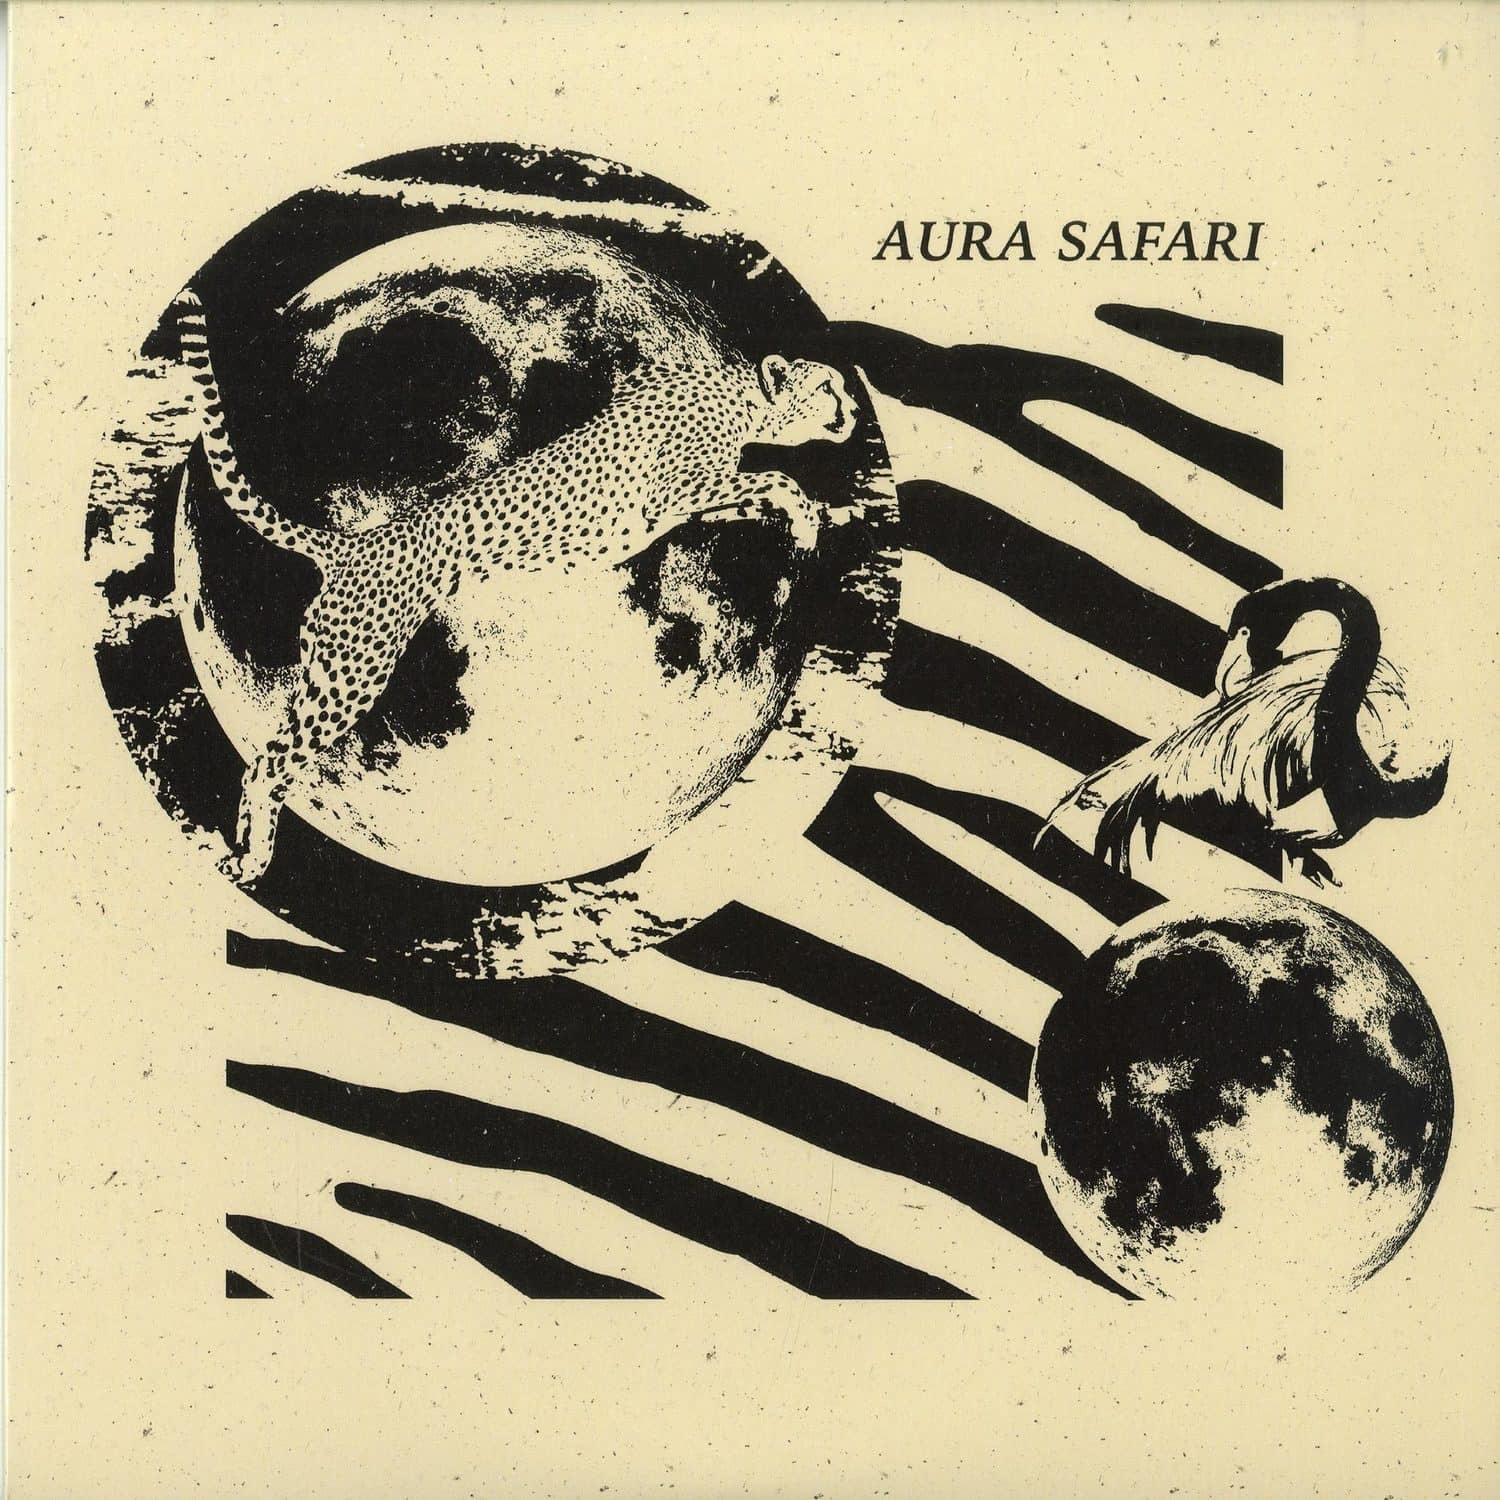 Aura Safari - AURA SAFARI 